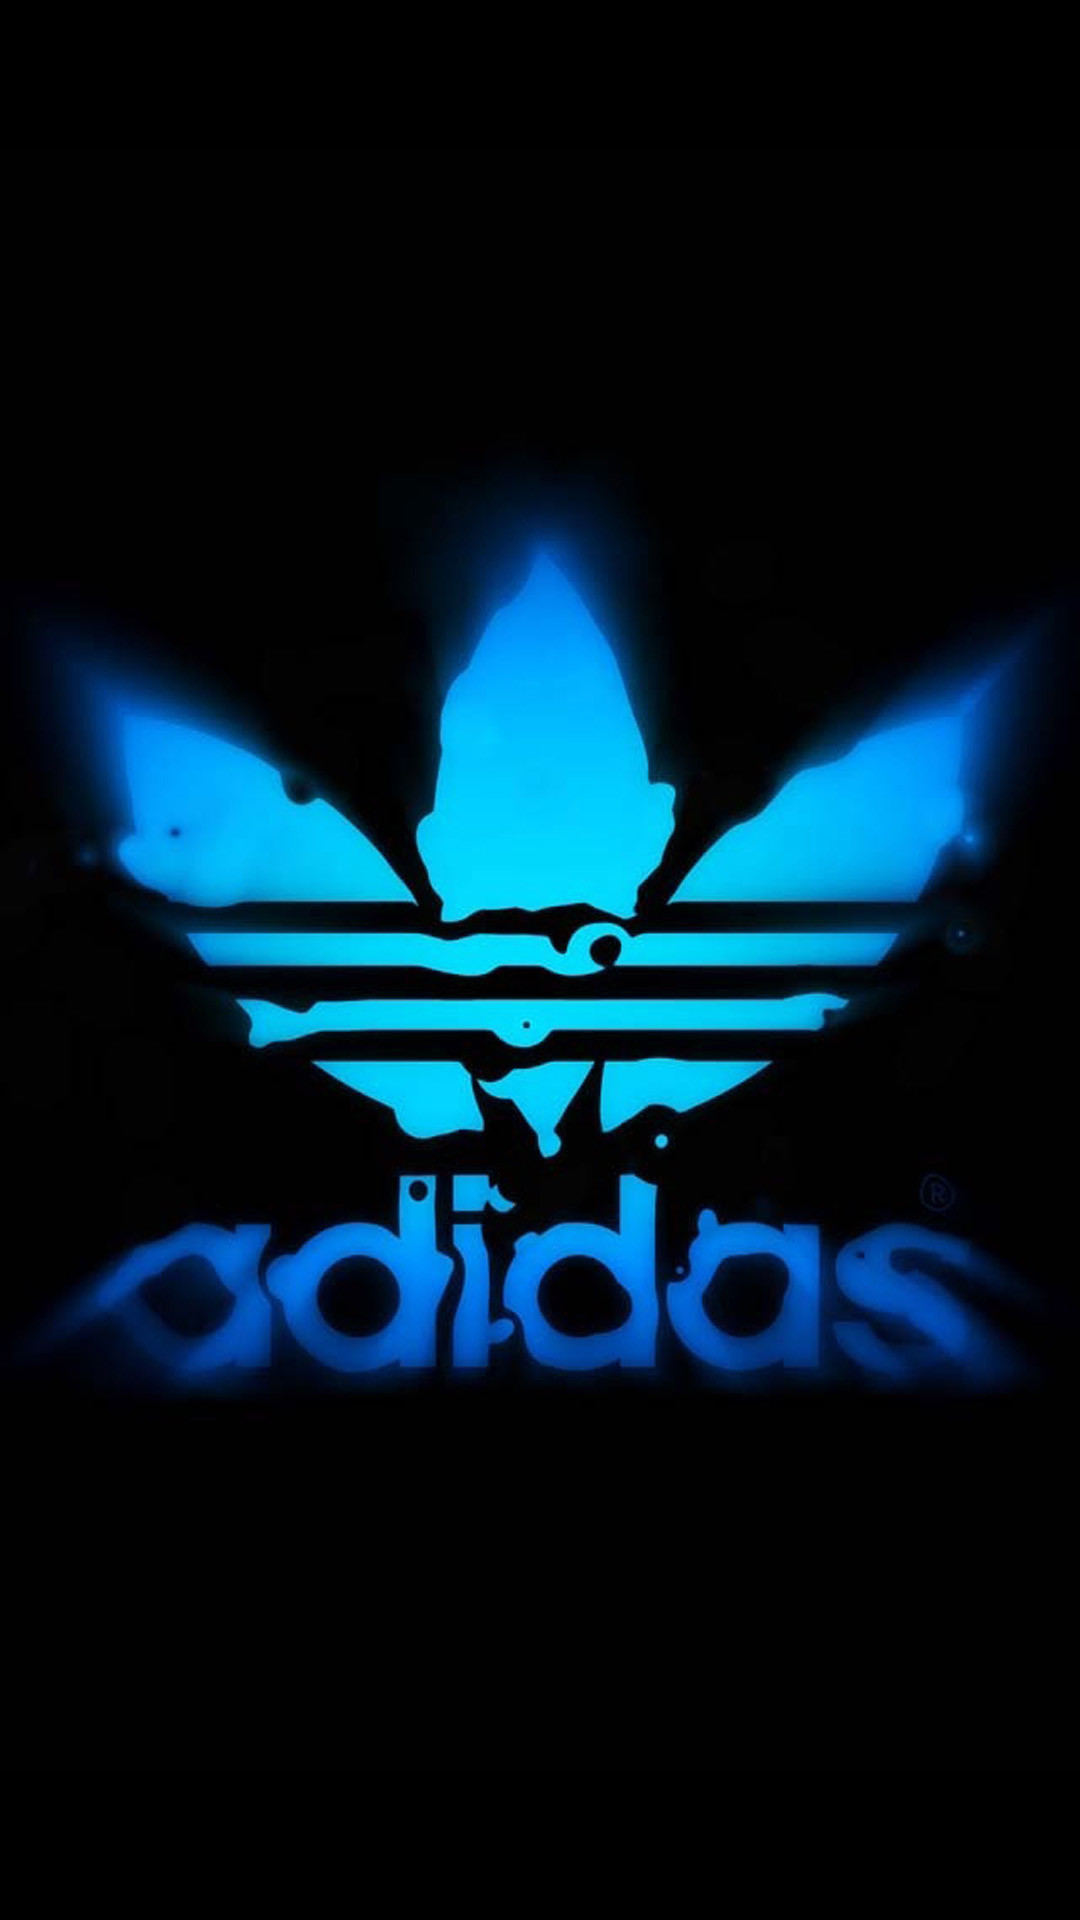 Adidas Logo Wallpaper (71+ pictures)